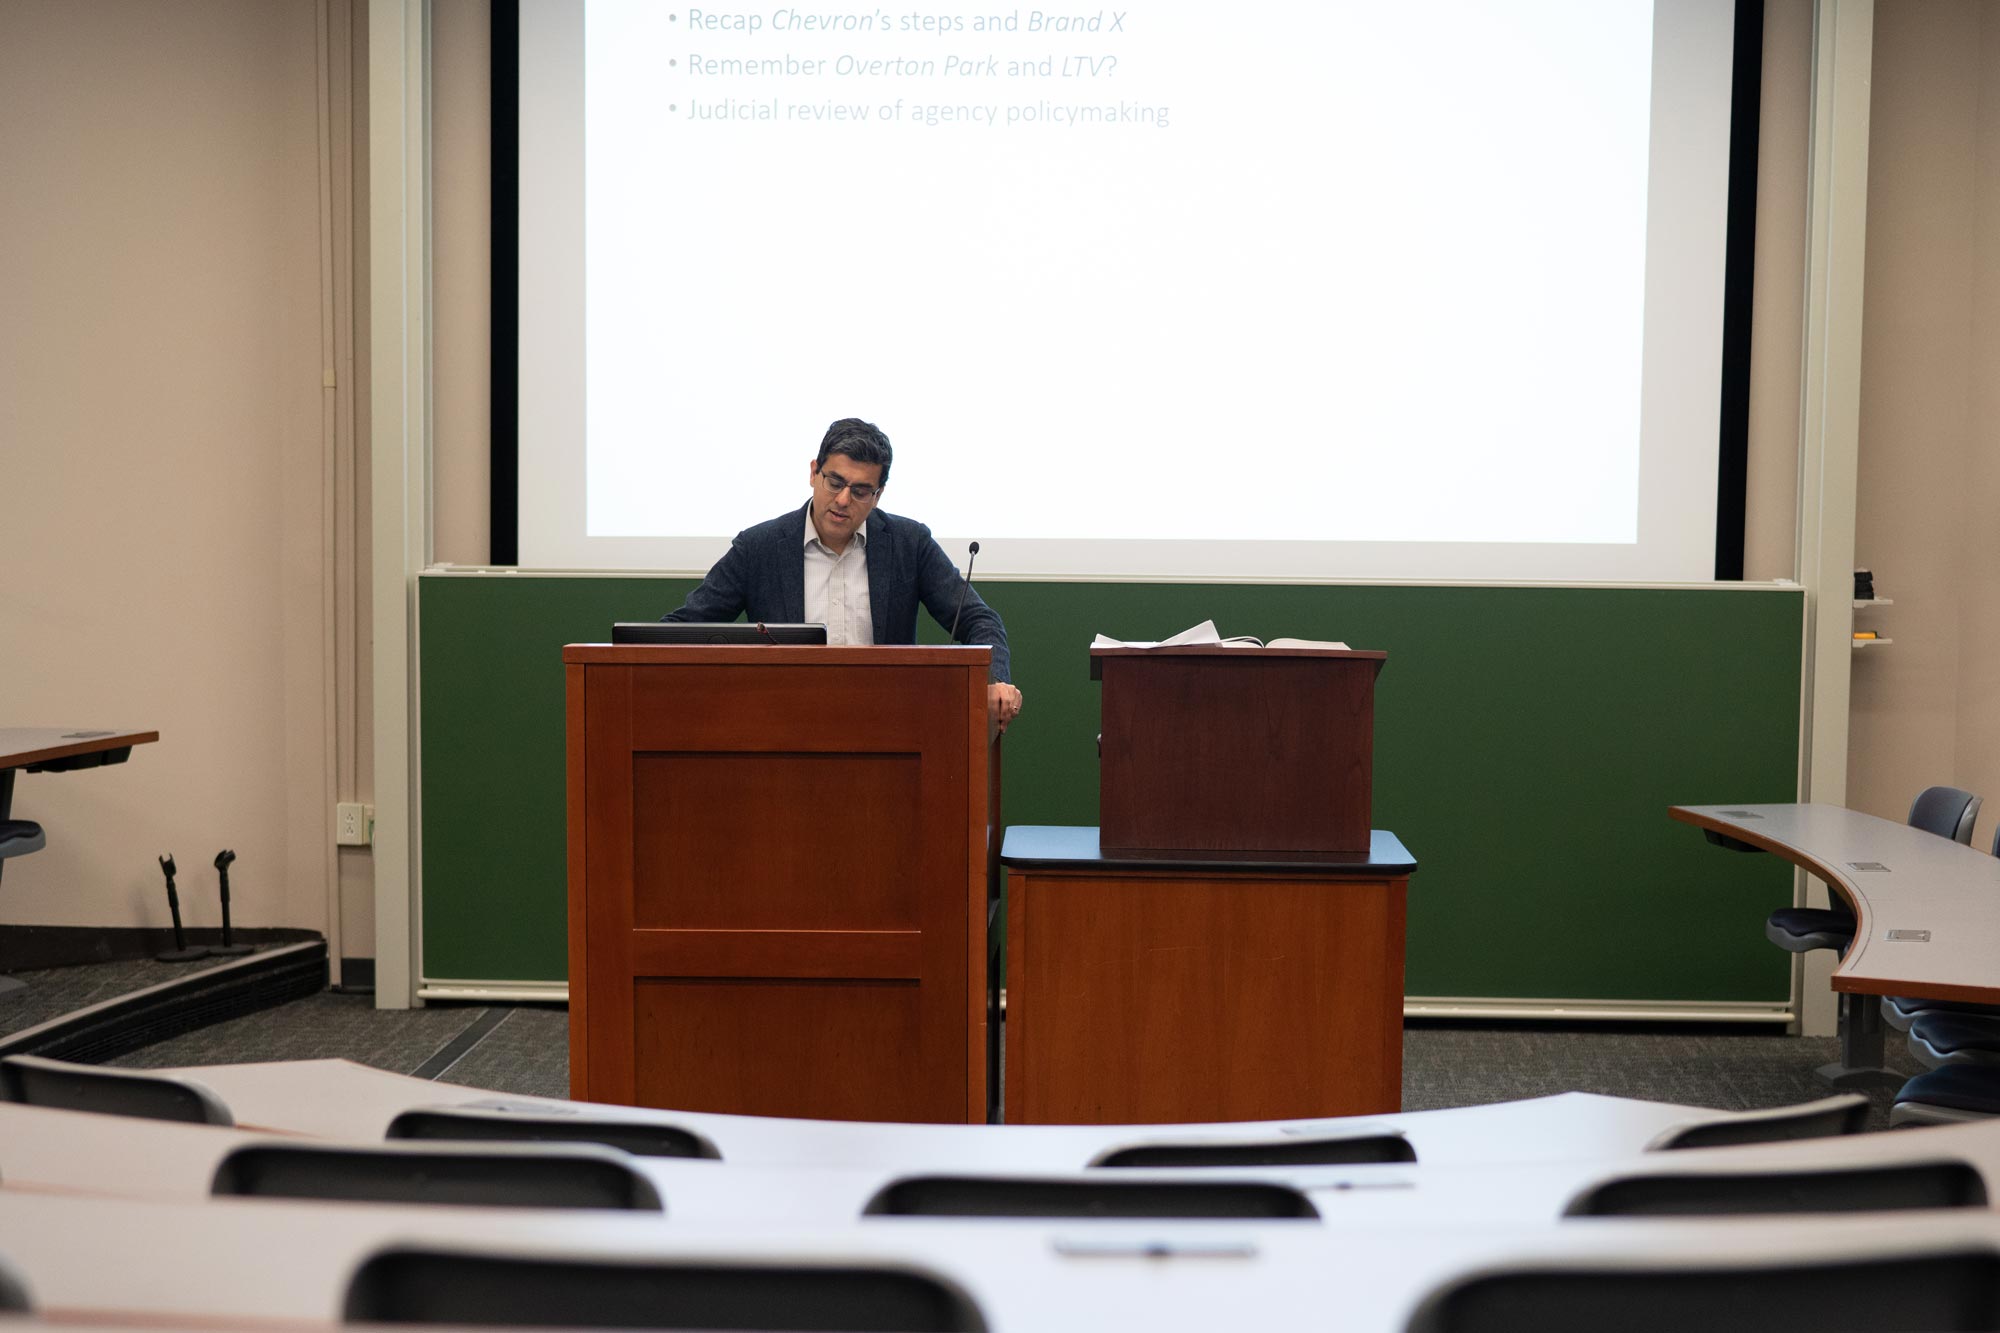 Aditya Bamzai lectures from a podium